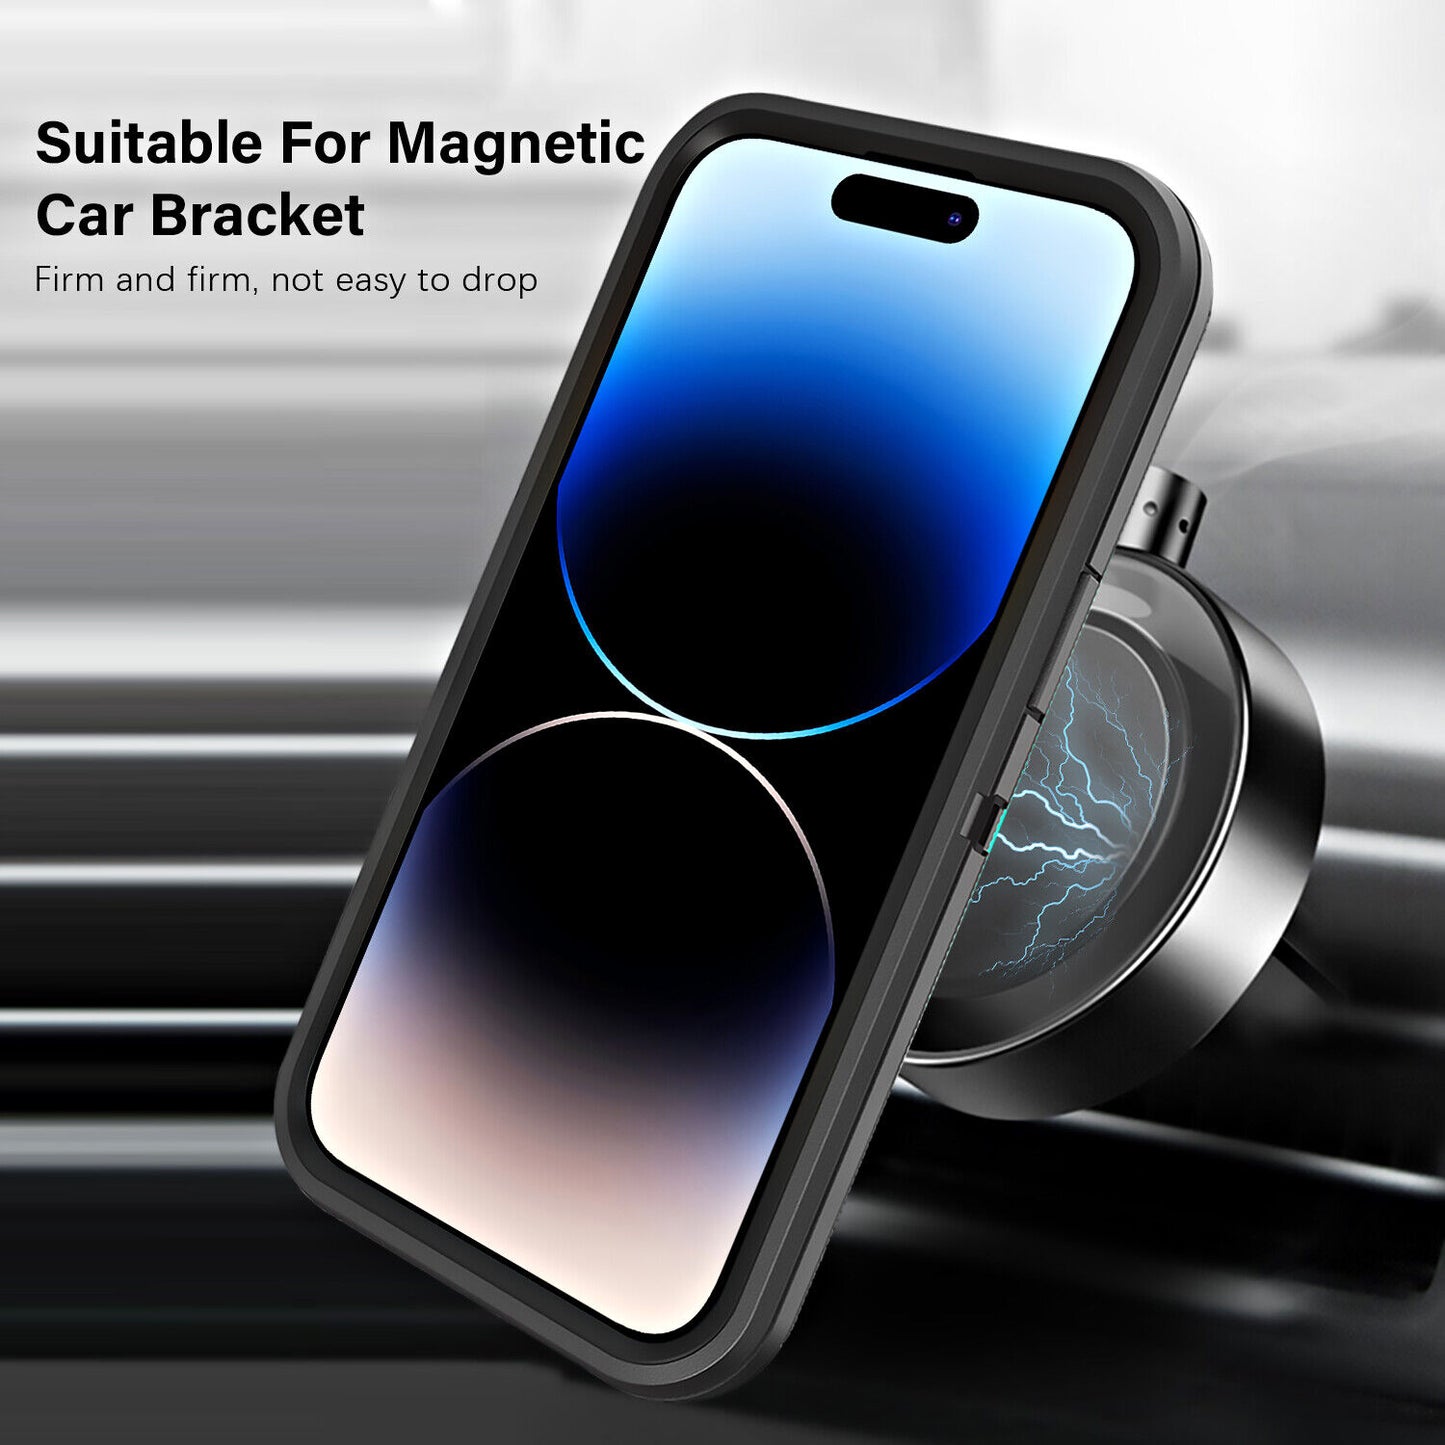 Nebula™  Rugged Magsafe Lock Stand Grey - iPhone Cases